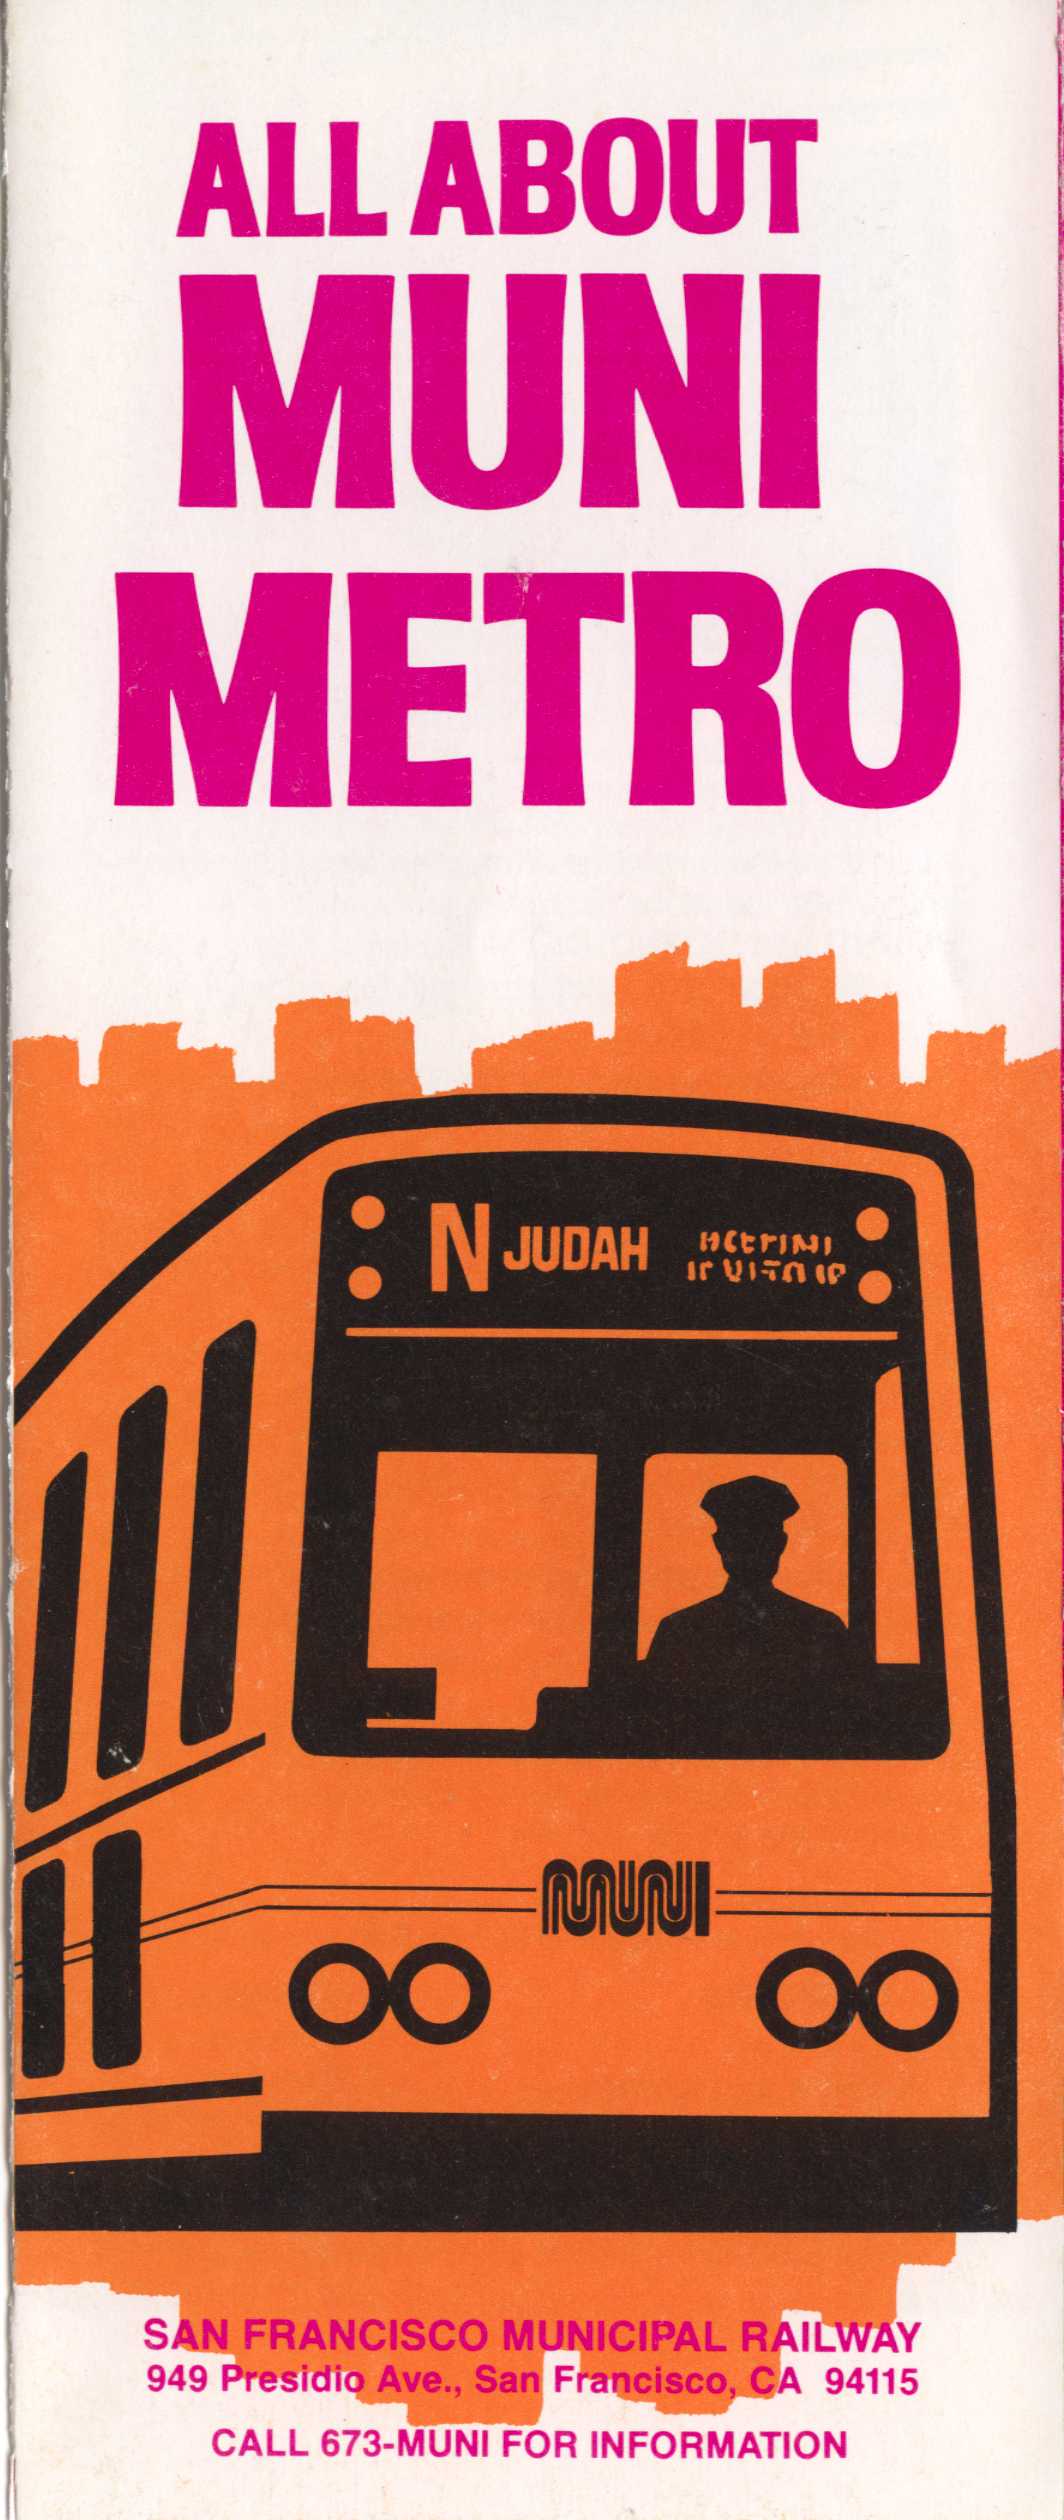 All About Muni Metro